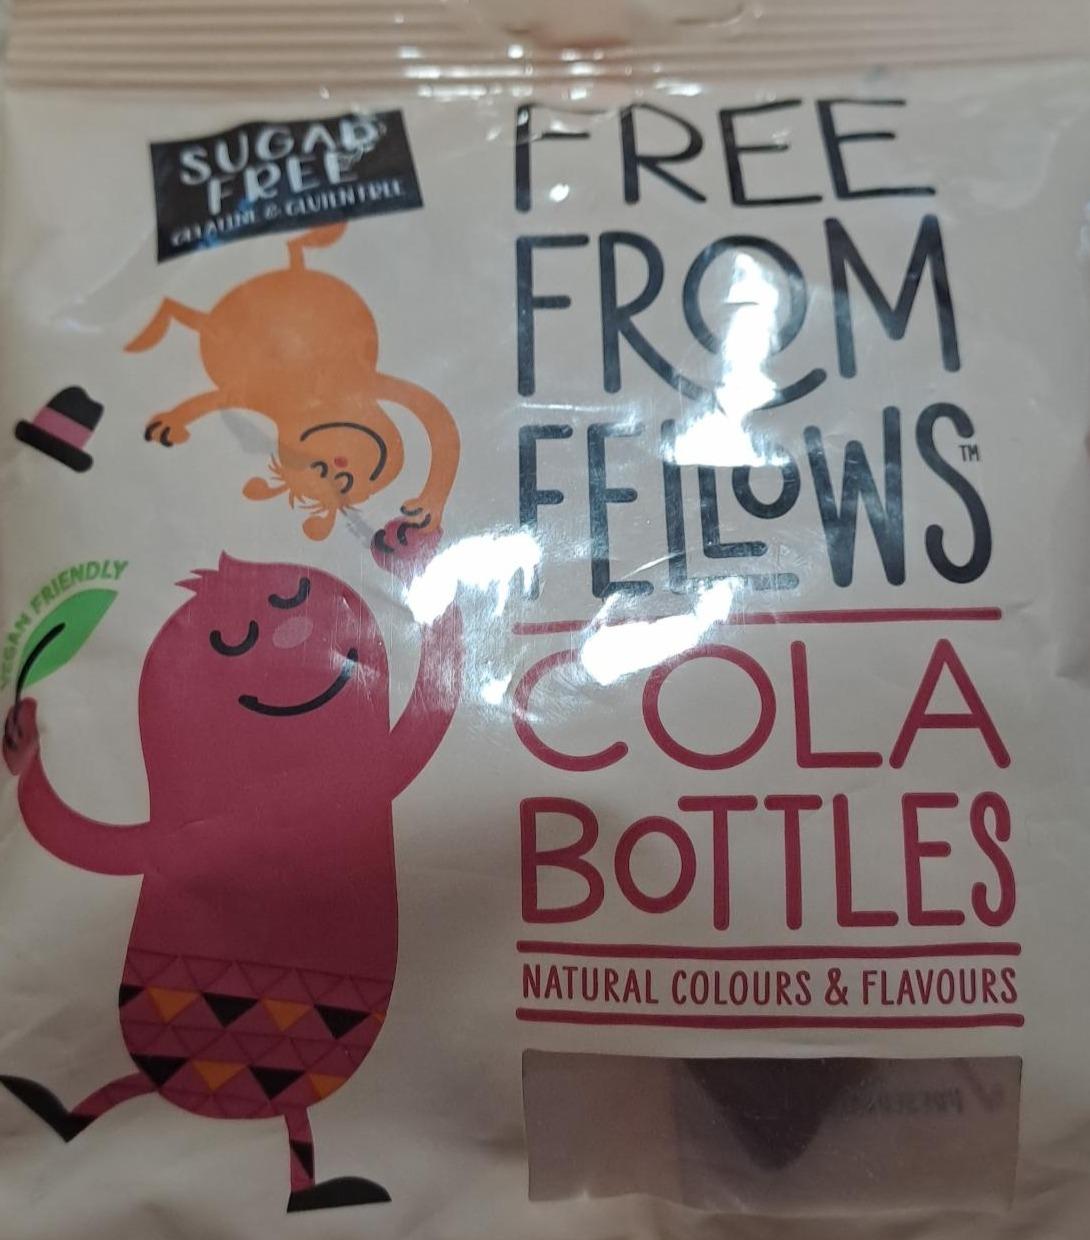 Фото - Цукерки жувальні cola bottles Free From Fellows